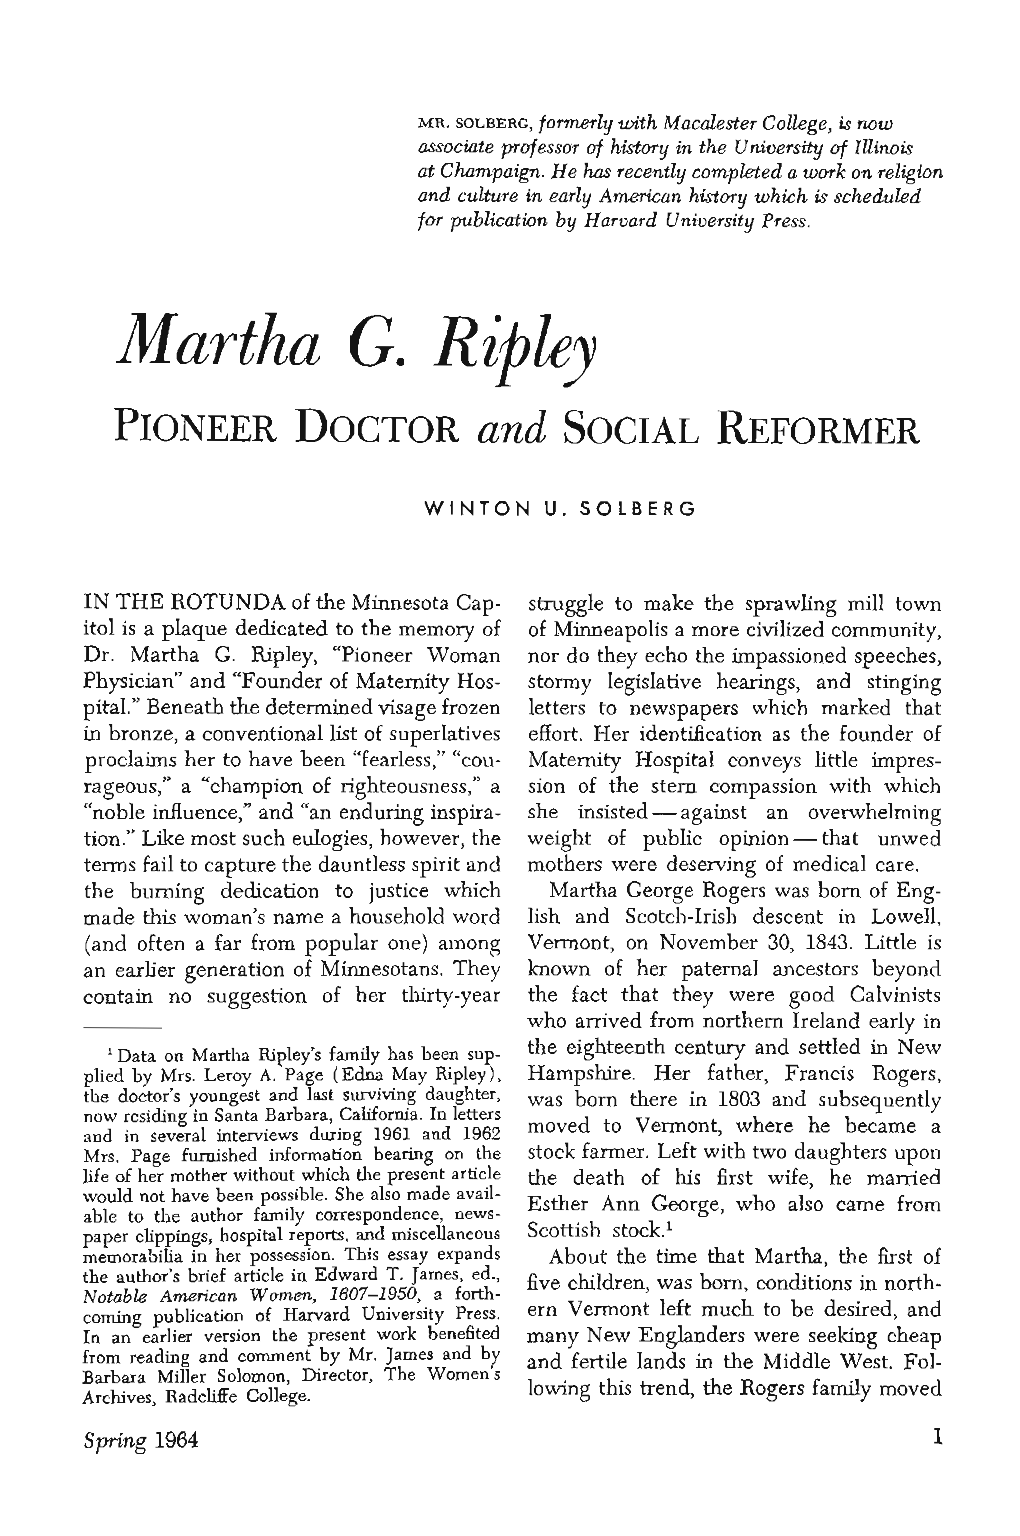 Martha G. Ripley, Pioneer Doctor and Social Reformer